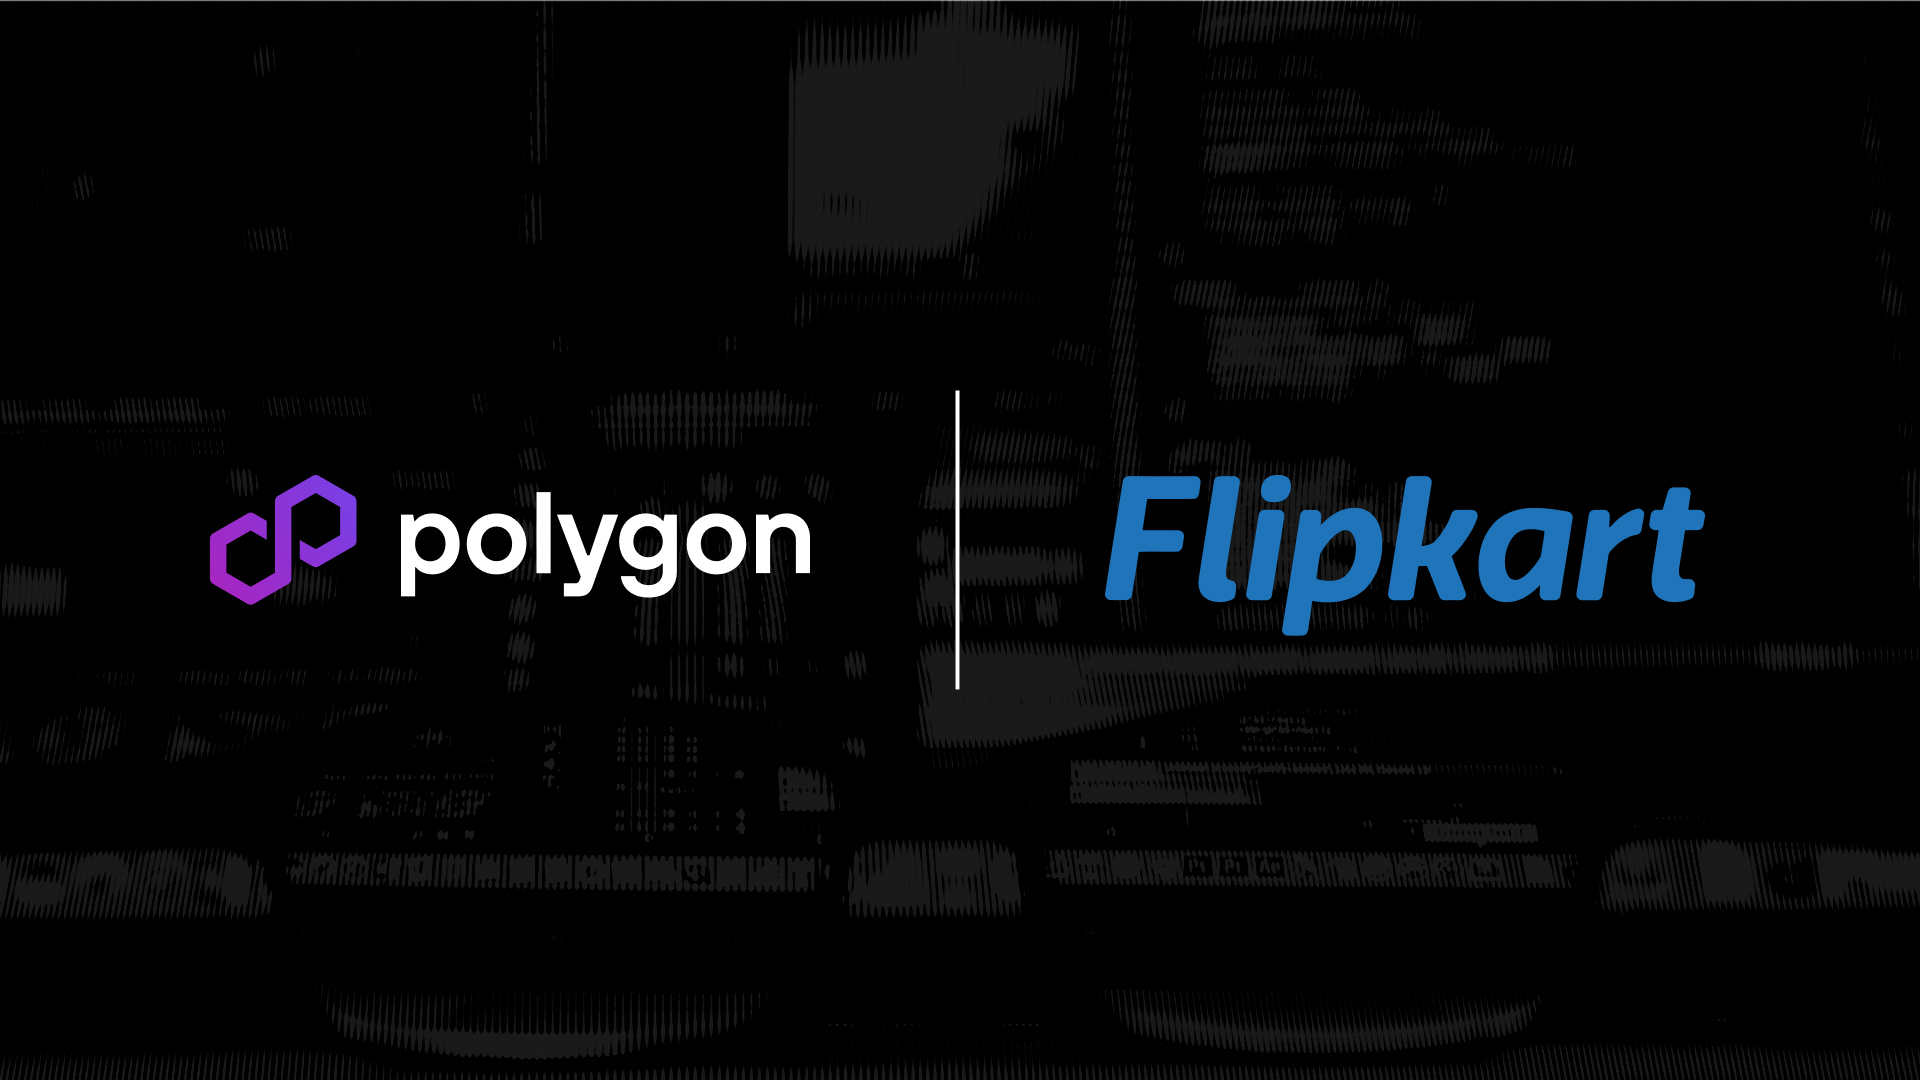 Polygon Launches Web3 Loyalty Program With Flipkart